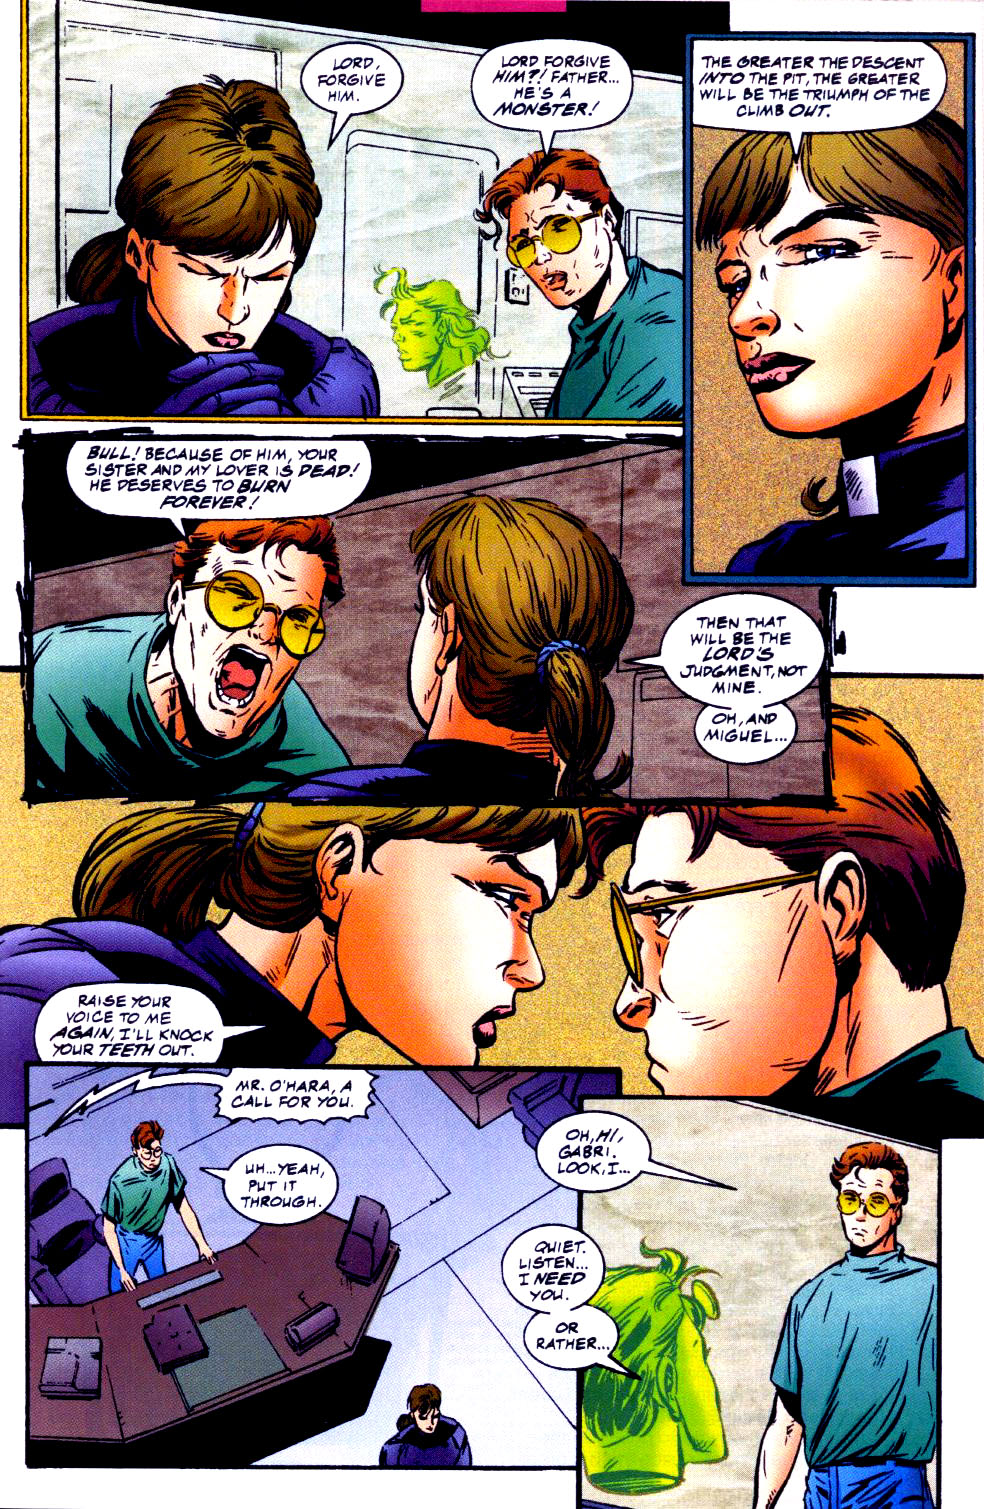 Spider-Man 2099 (1992) issue 39 - Page 19